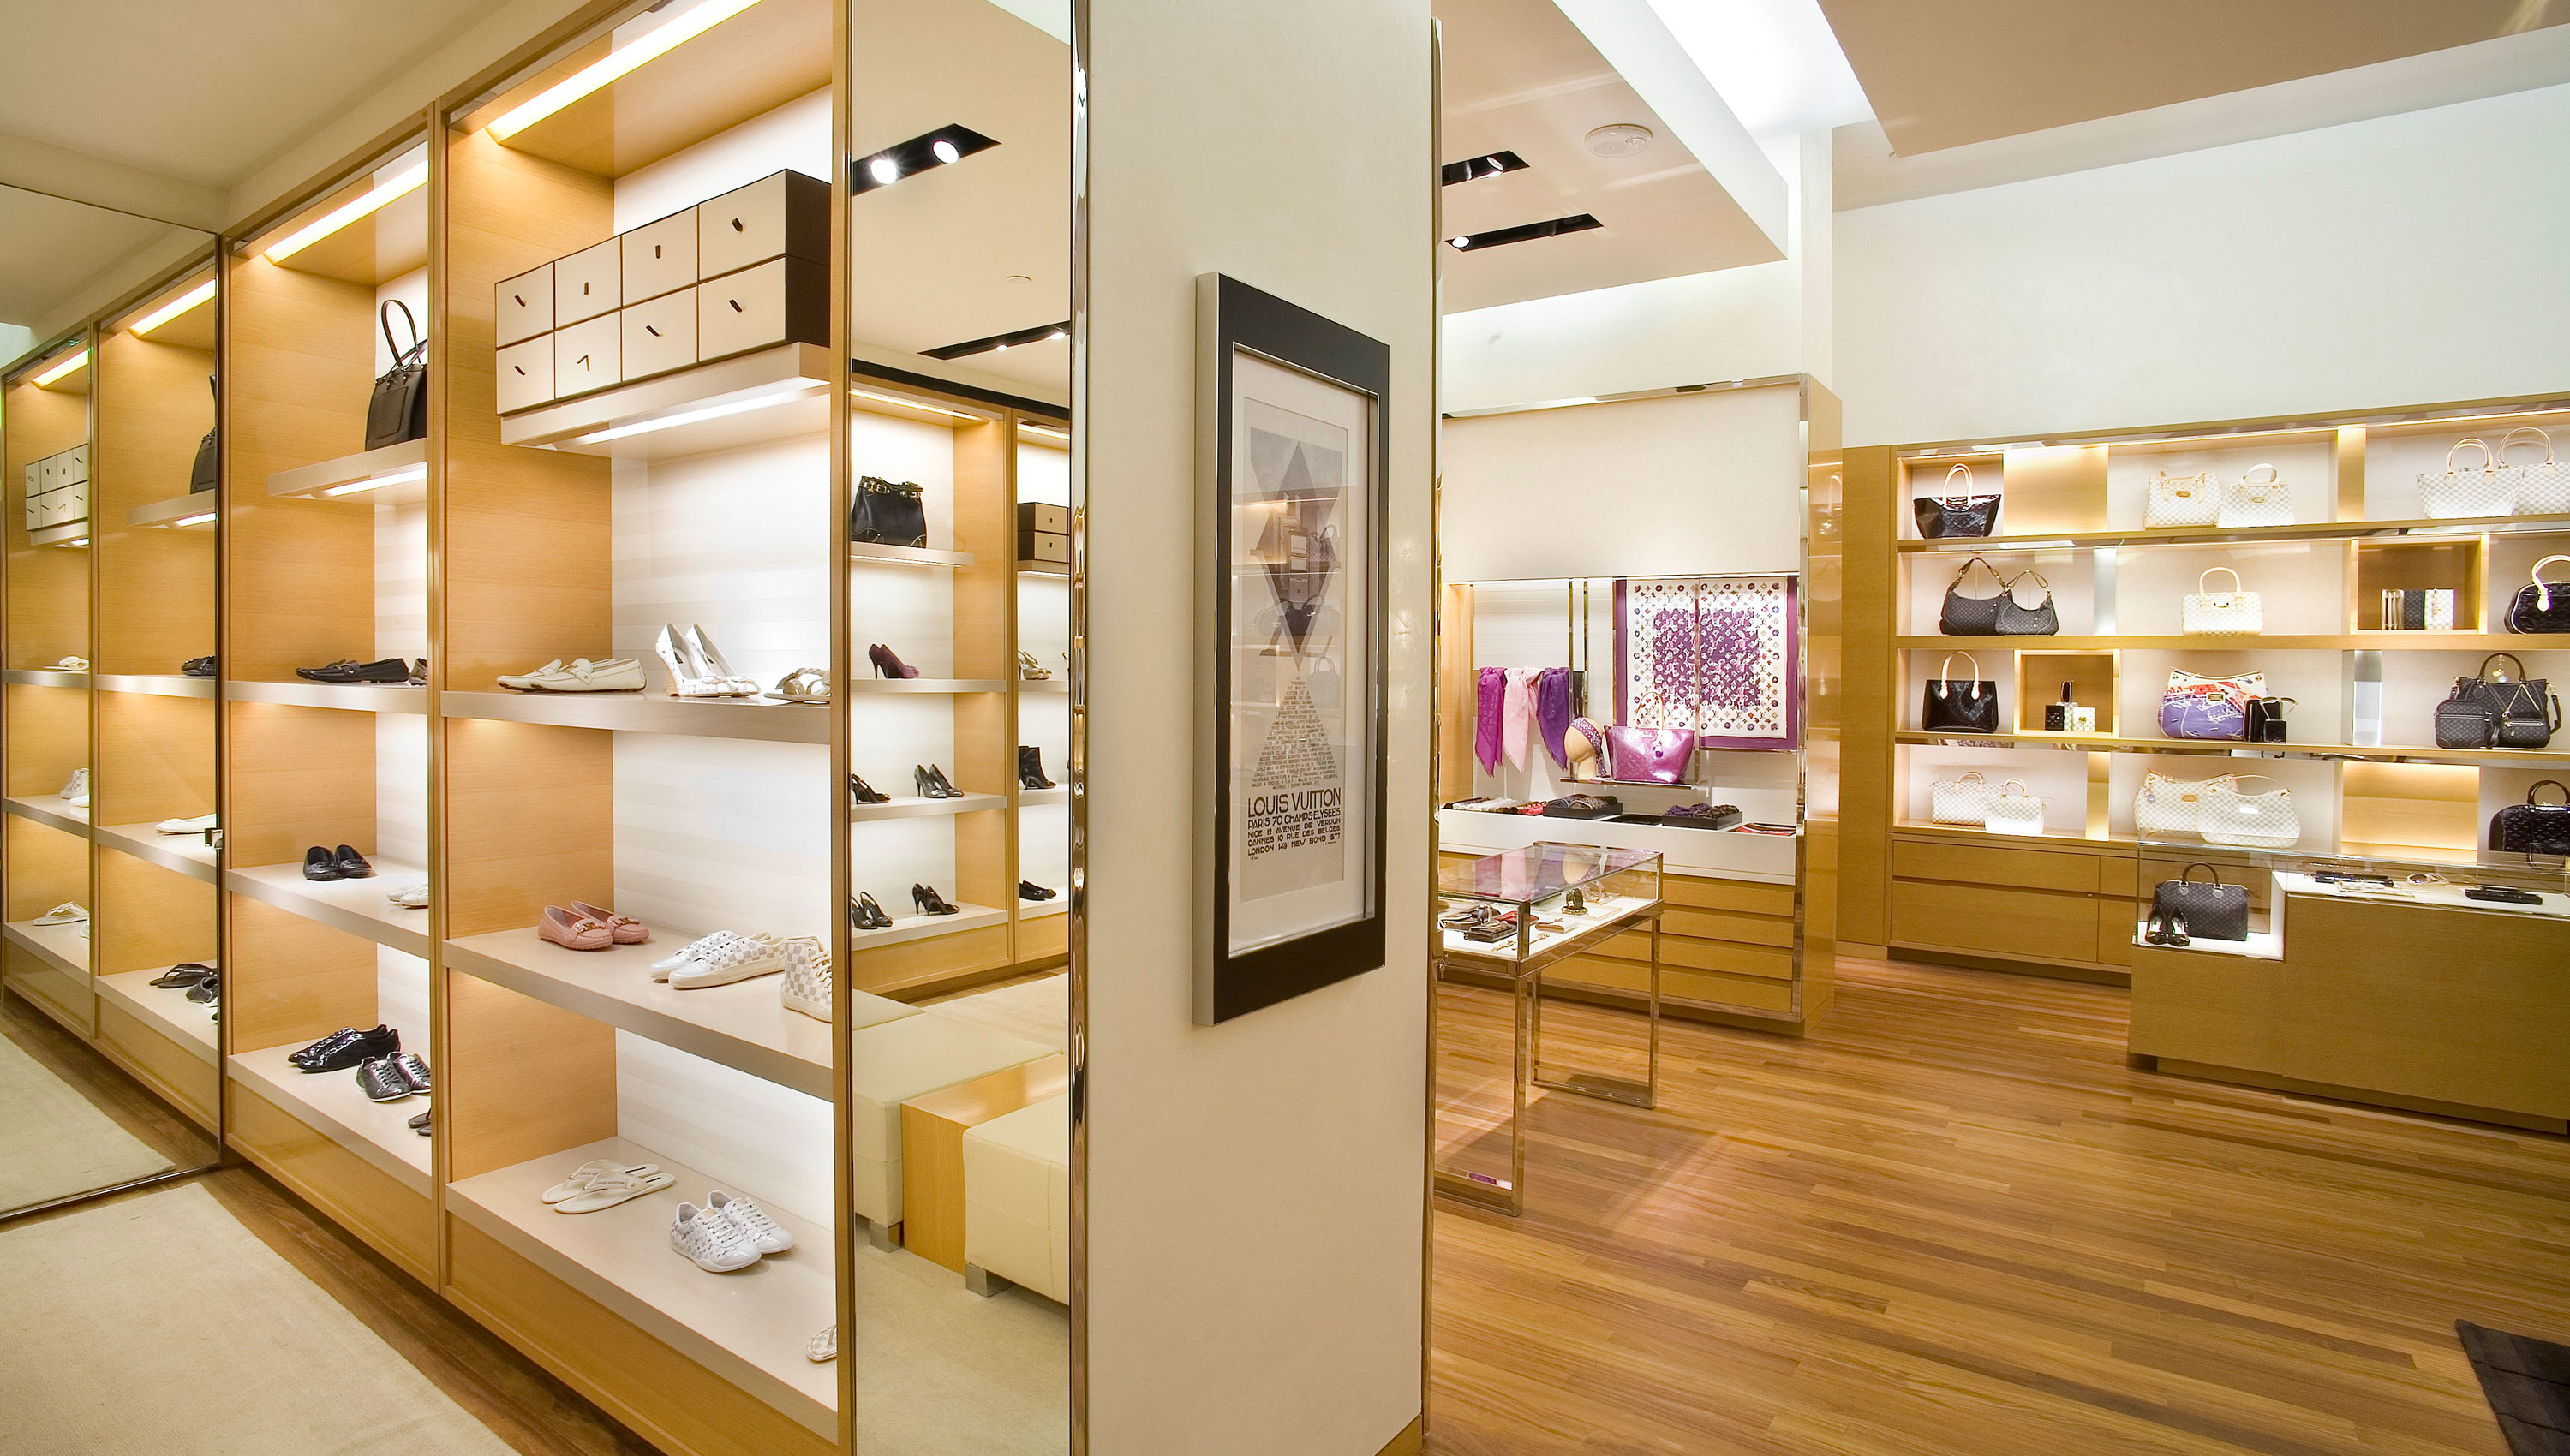 Photos at Louis Vuitton - Boutique in Roseville